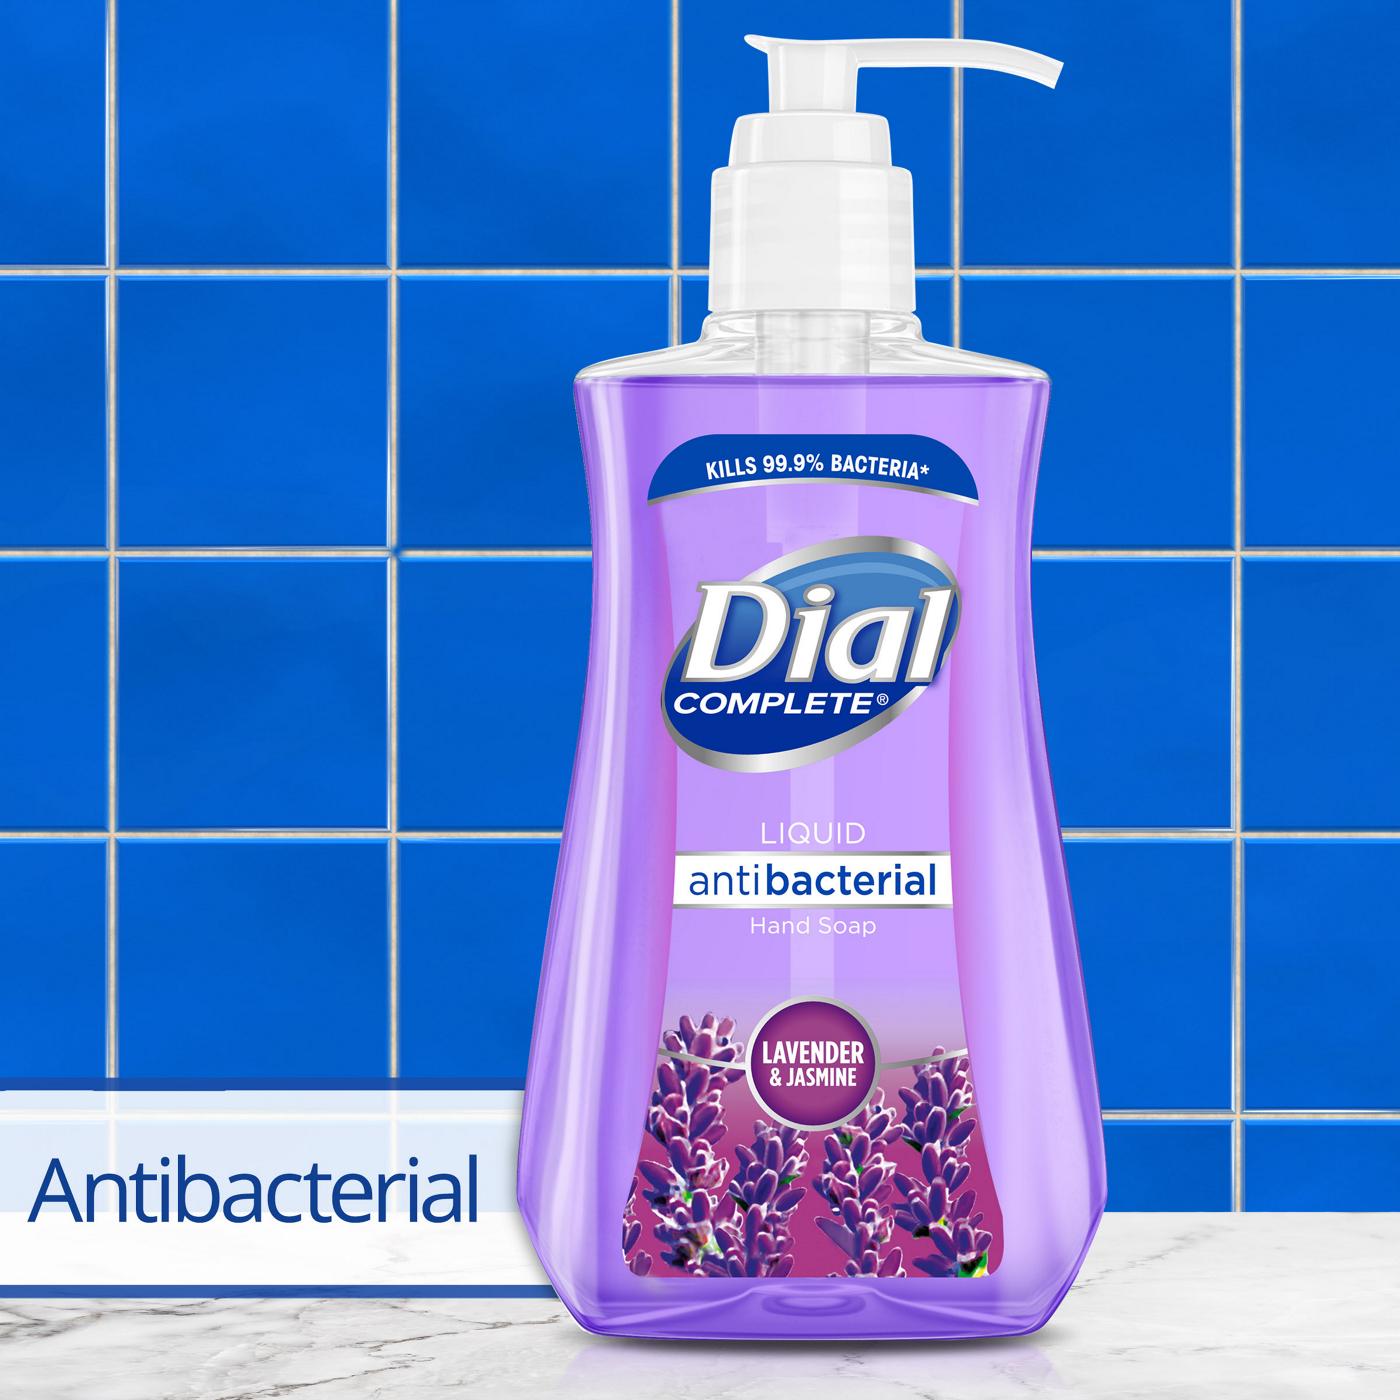 Dial Complete Antibacterial Liquid Hand Soap, Lavender & Jasmine Scent; image 3 of 4